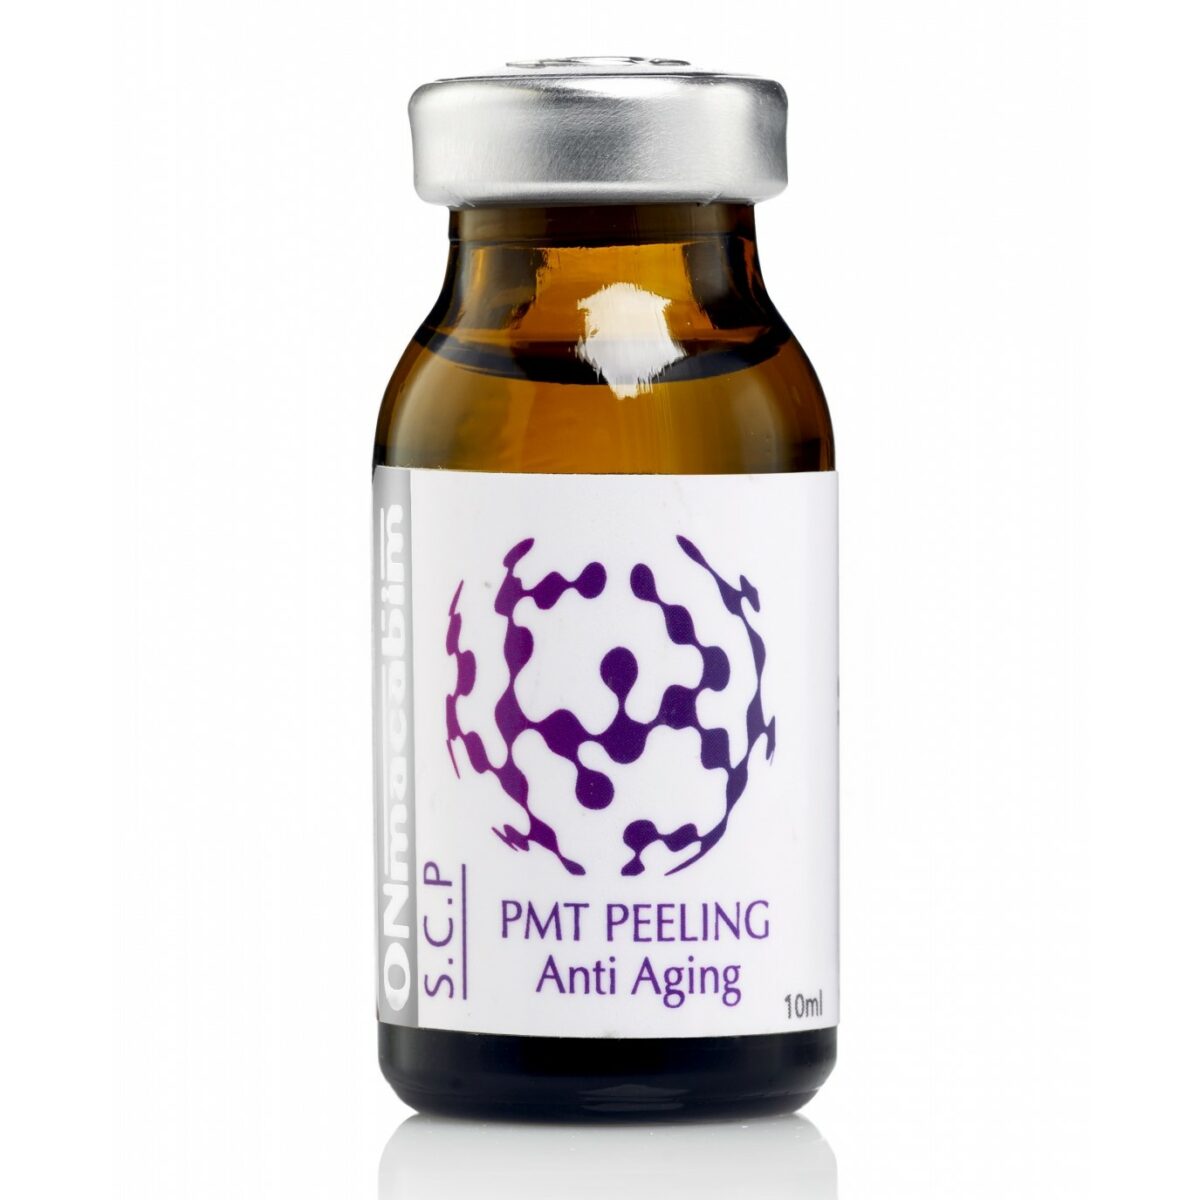 PMT Peeling Anti Aging PMT Антивозрастной фитиновый пилинг 10 мл ONMACABIM